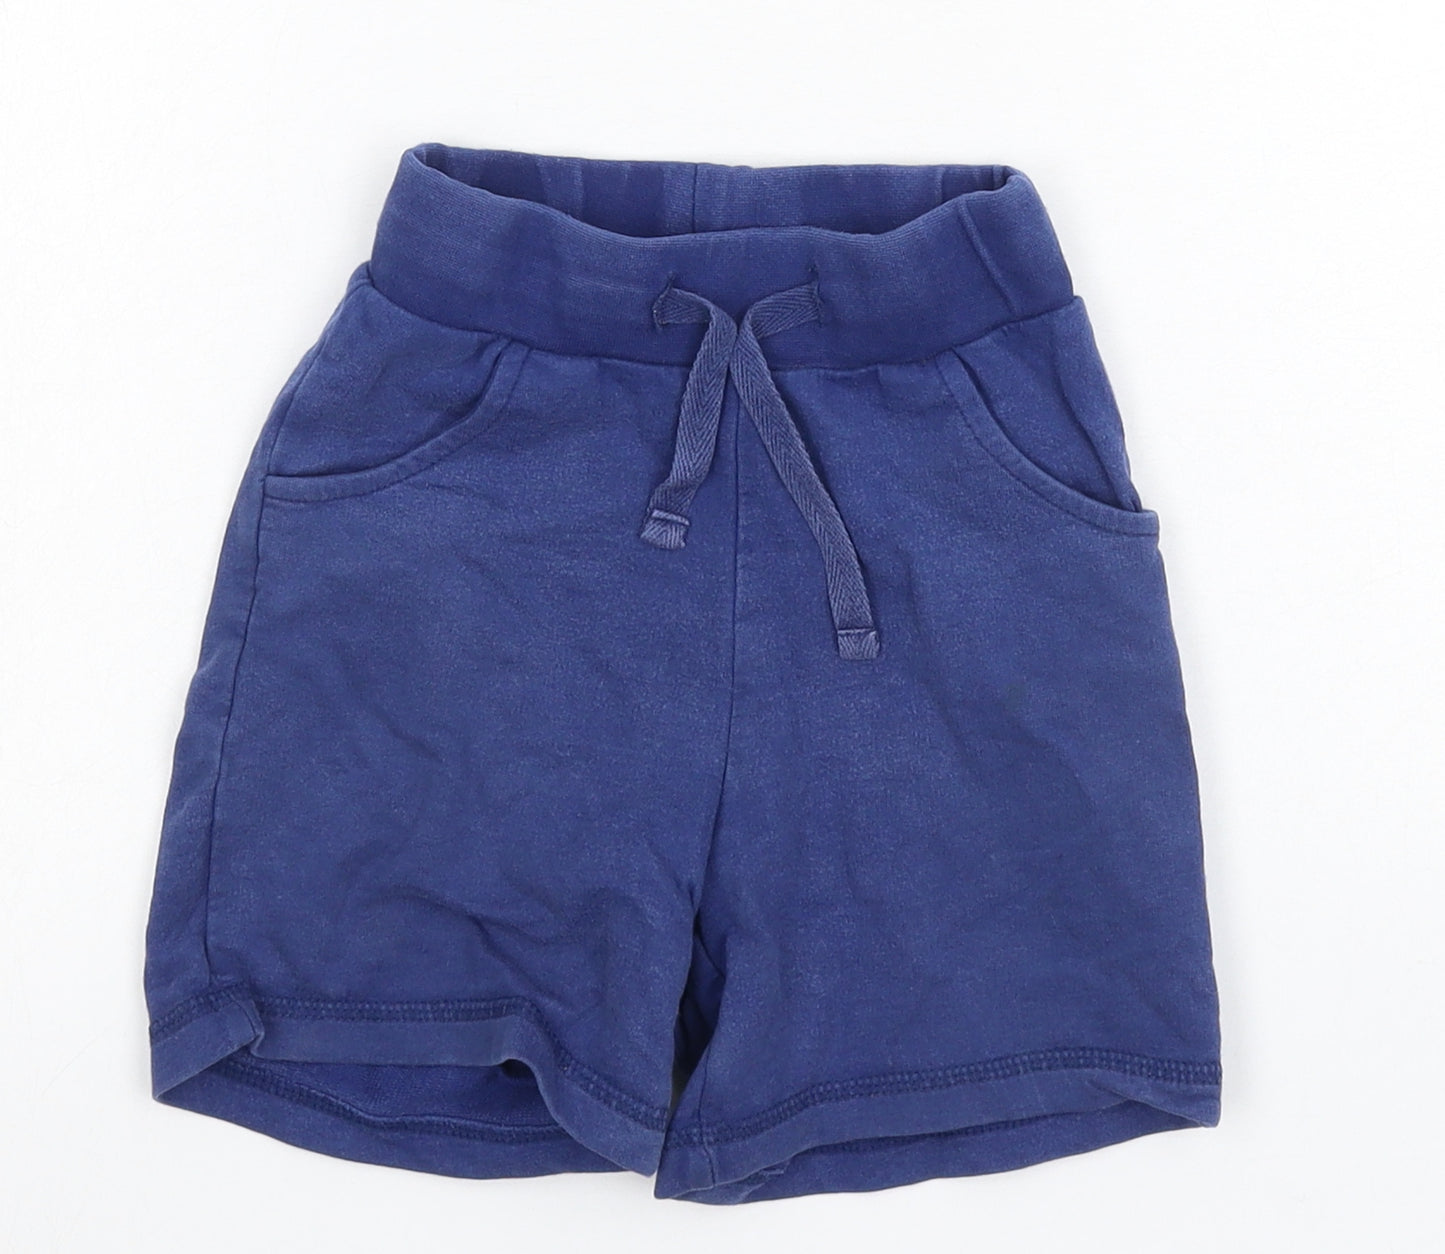 Maxomorra Boys Blue  Cotton Sweat Shorts Size 3-4 Years  Regular Drawstring